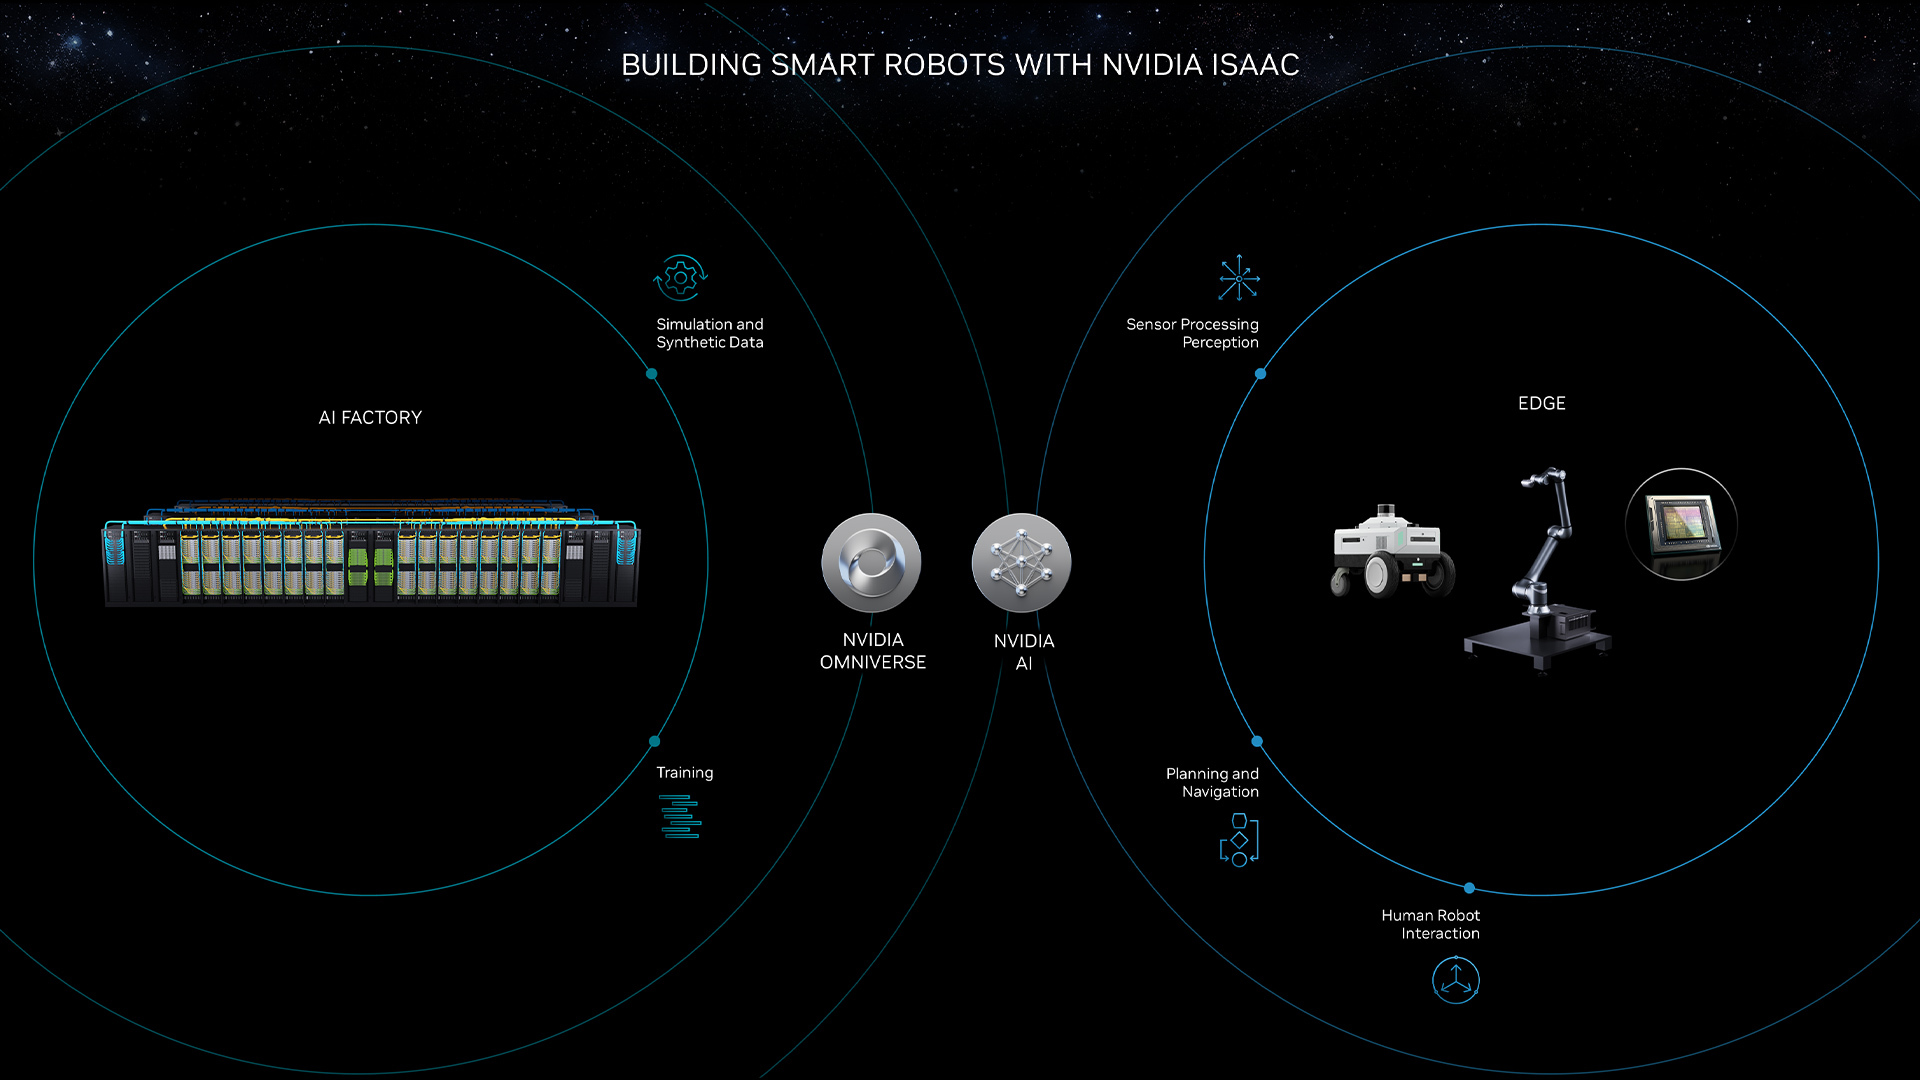 NVIDIA Isaac Robotics platform